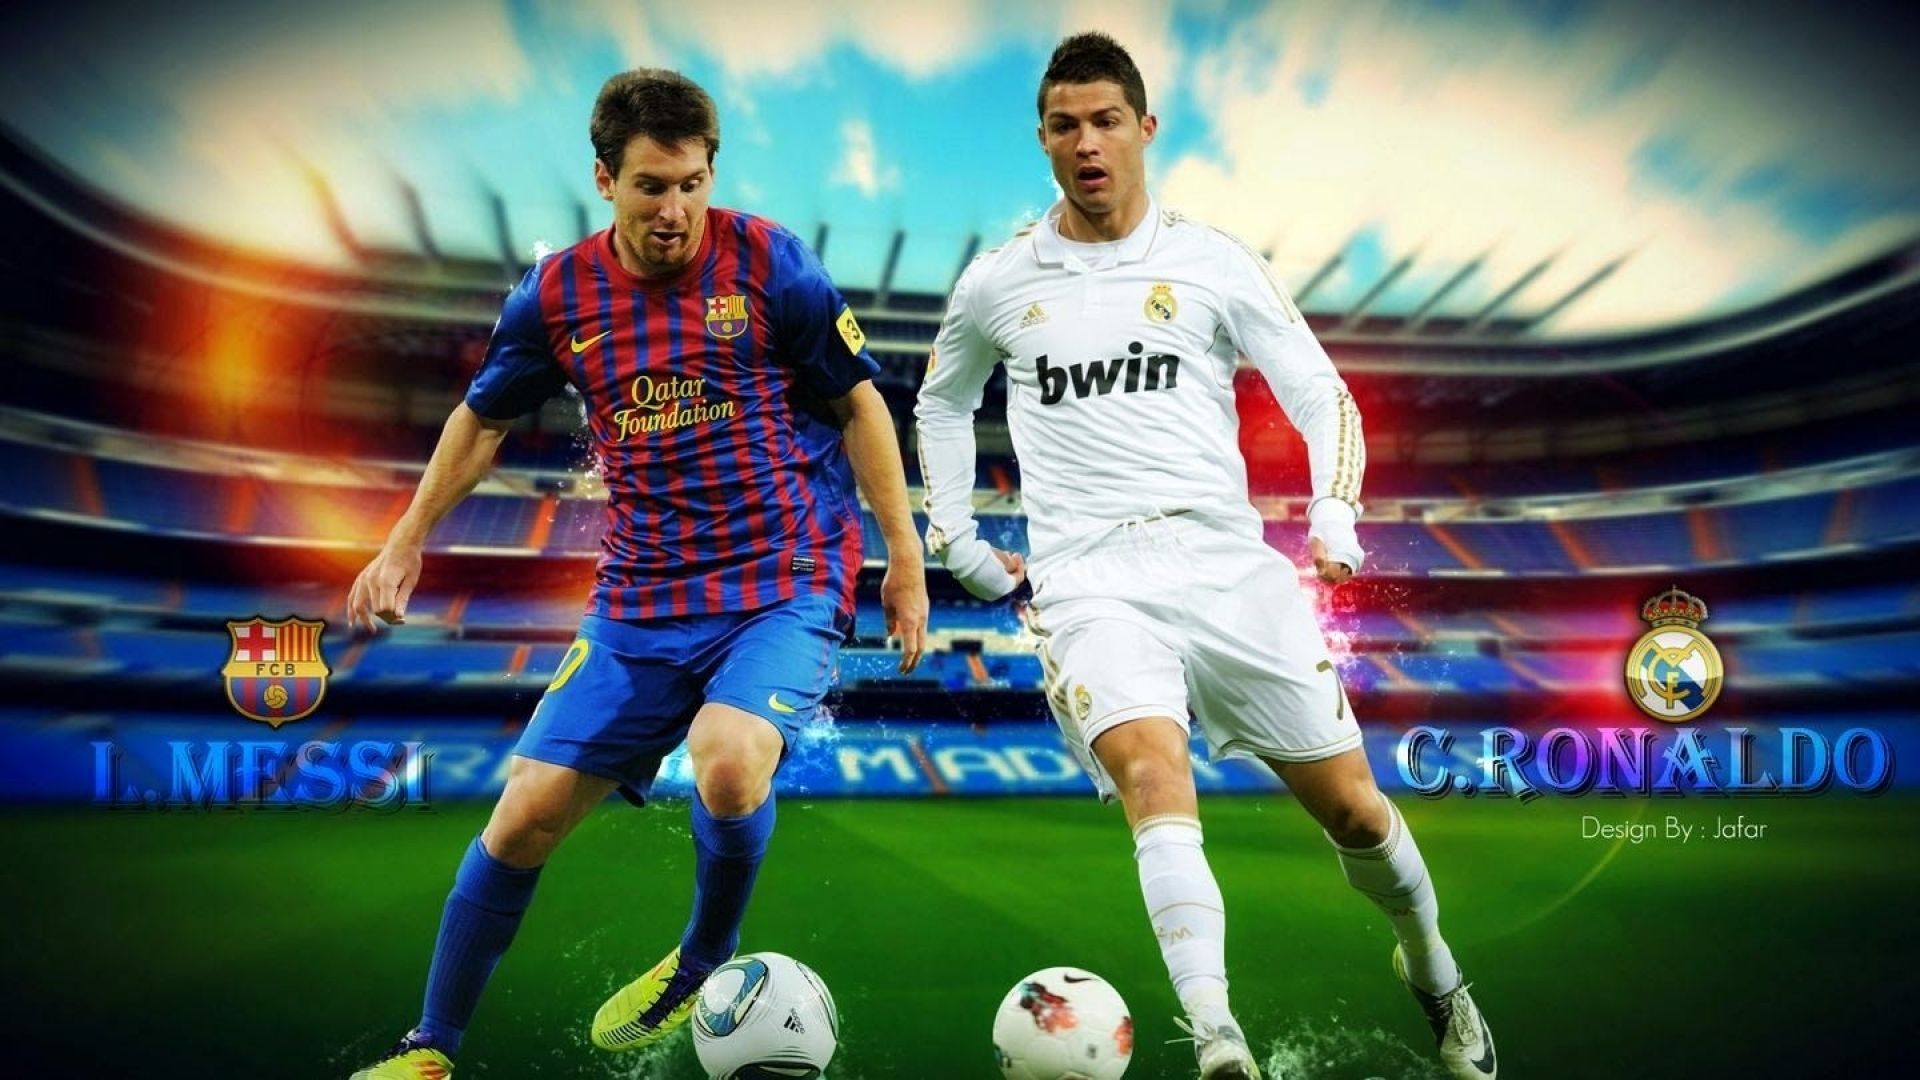 Messi And Ronaldo Wallpaper Download - C Ronaldo Vs Messi 2012 , HD Wallpaper & Backgrounds